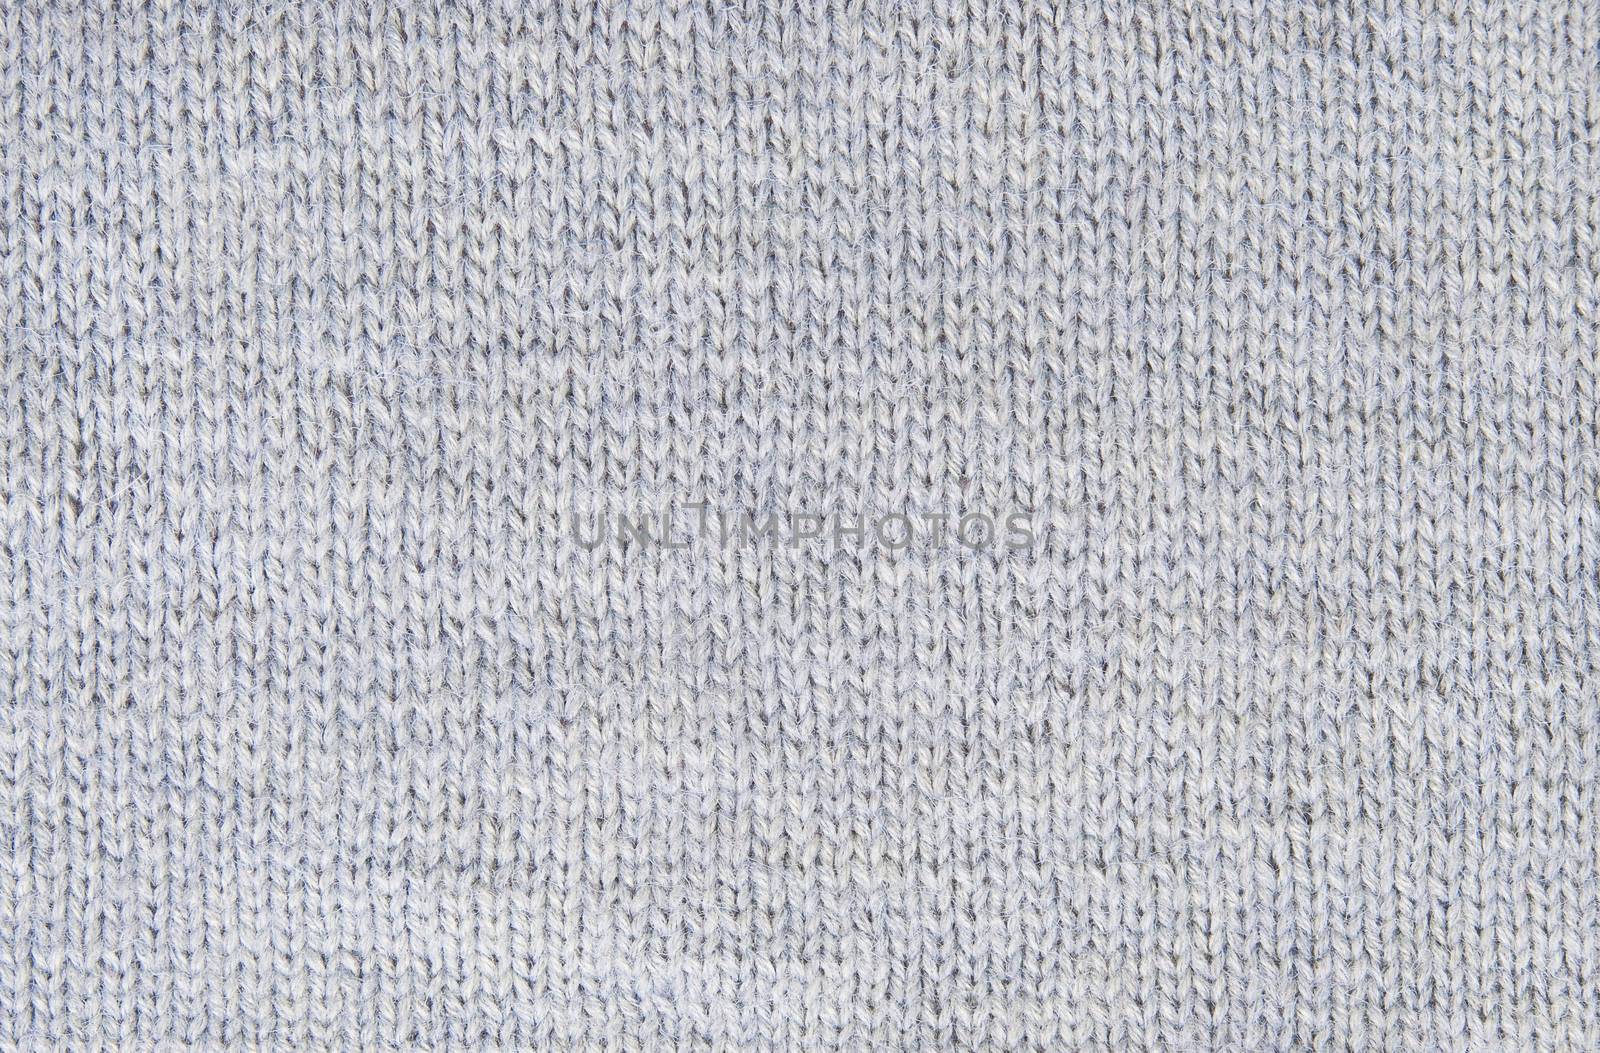 Abstract background small pattern of gray wool knitting yarn